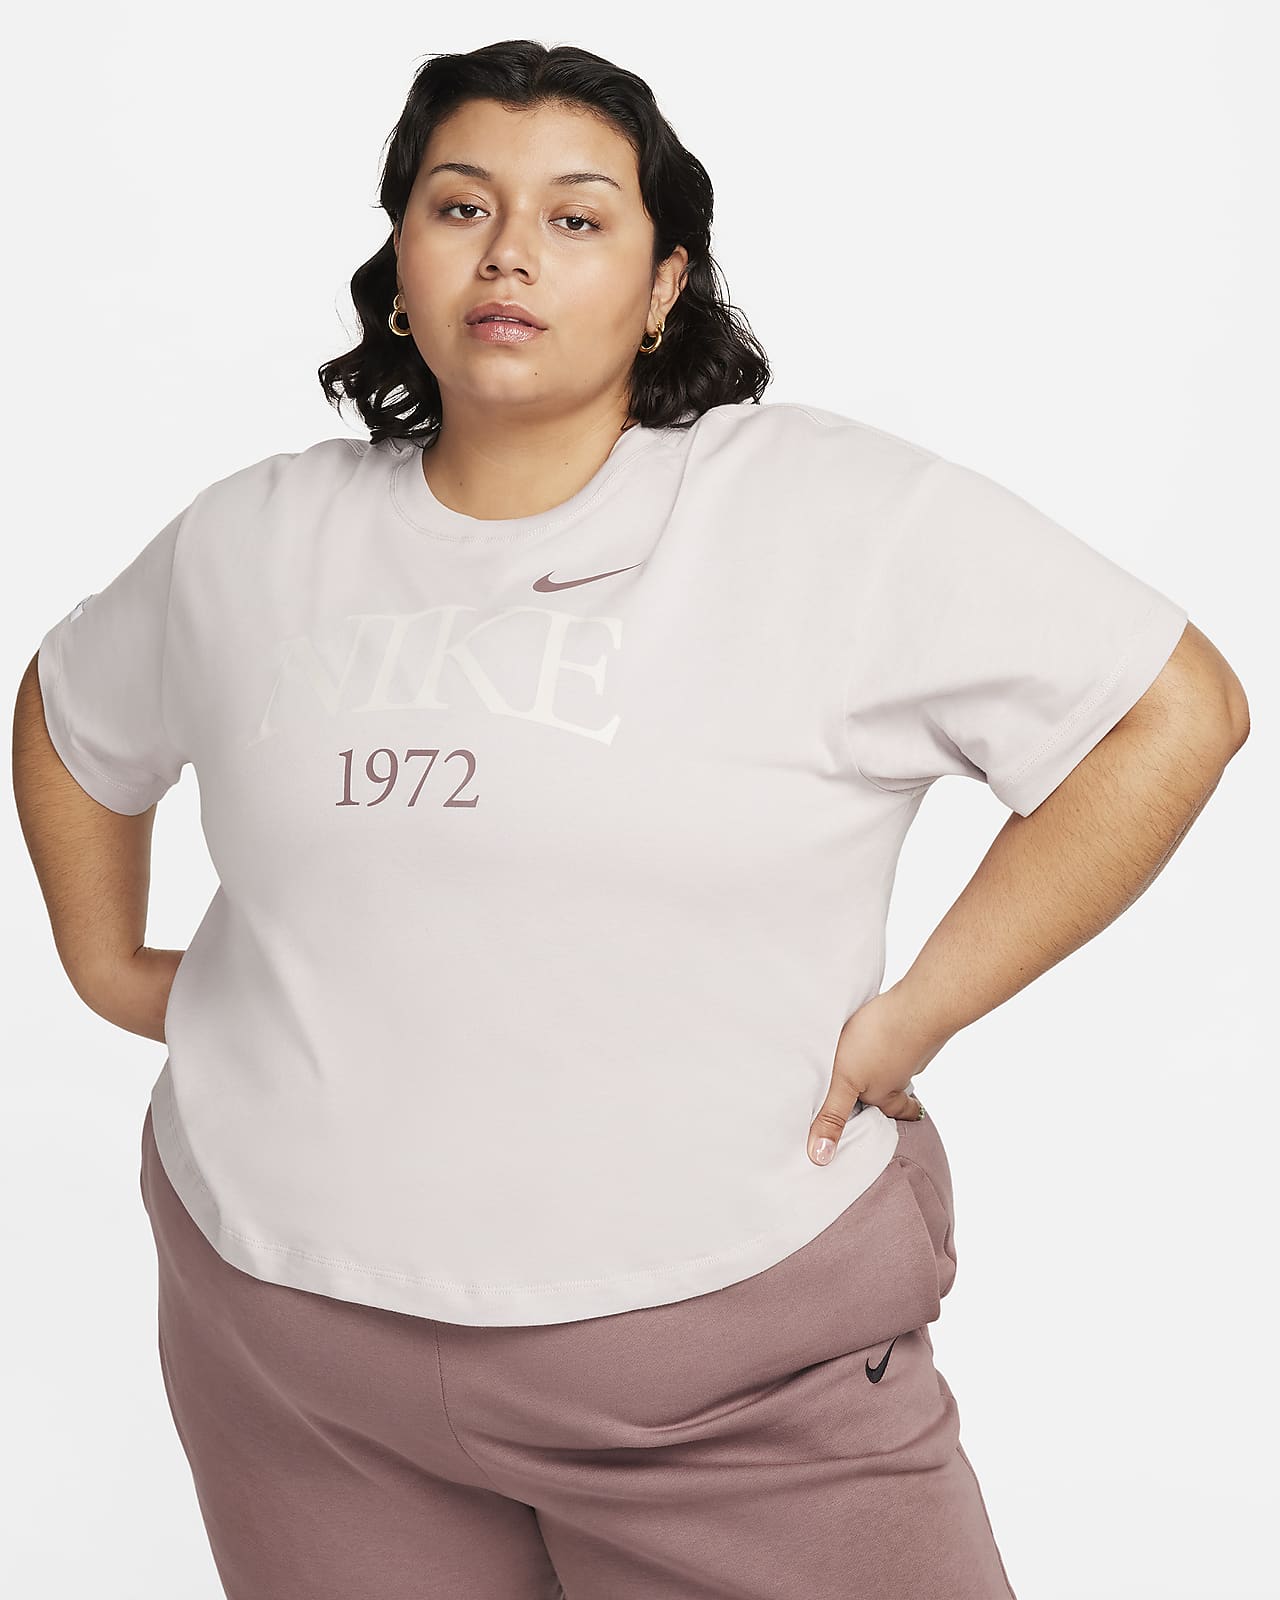 T-shirt Nike Sportswear Classic pour femme (grande taille)